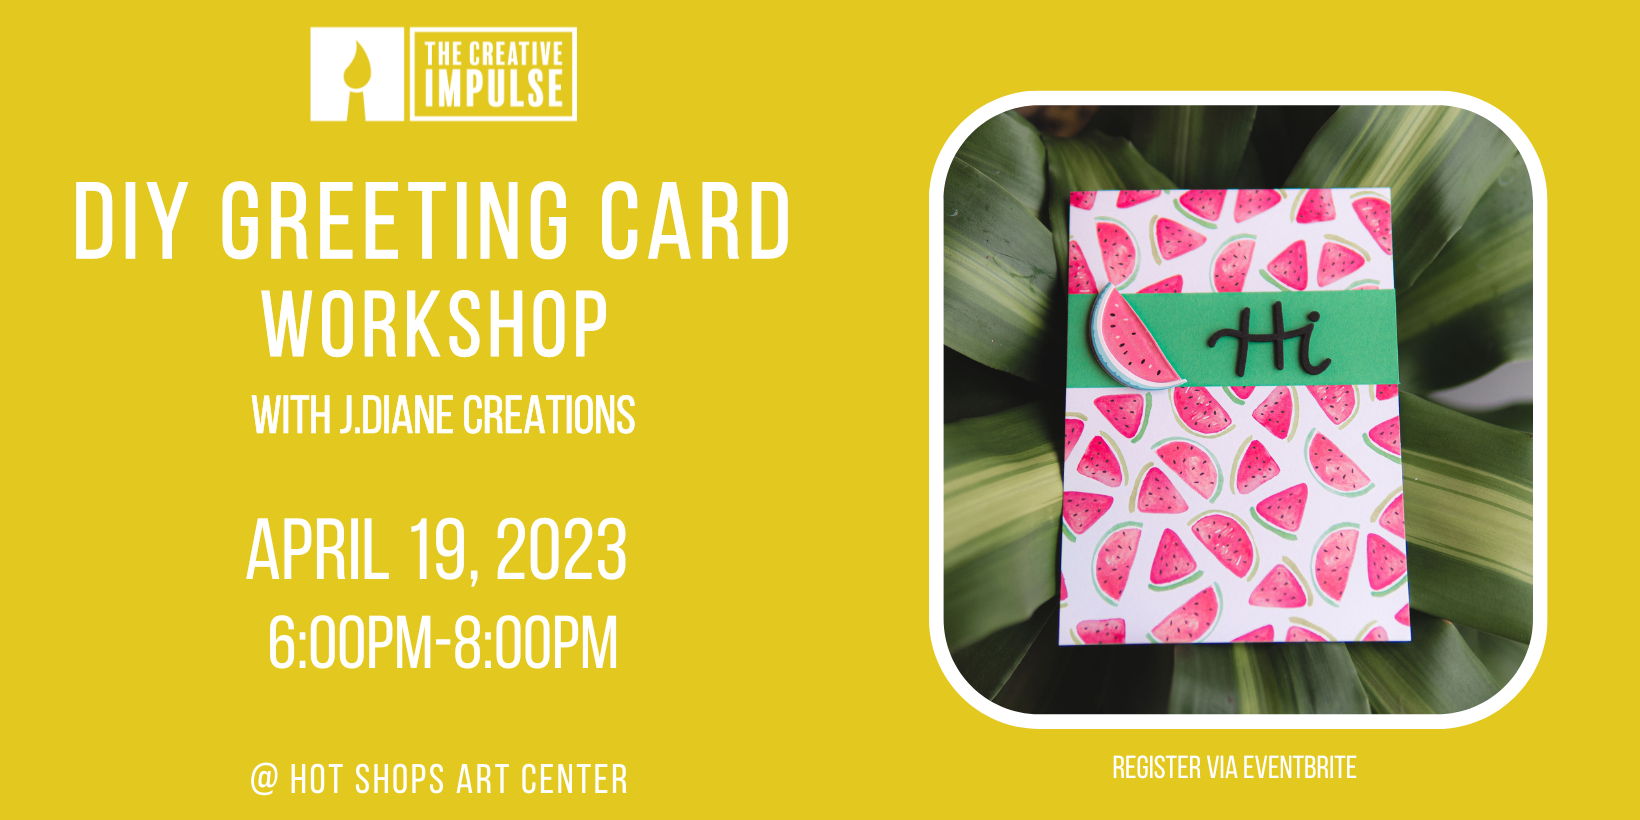 DIY Greeting Card Workshop with J.Diane Creations promotional image